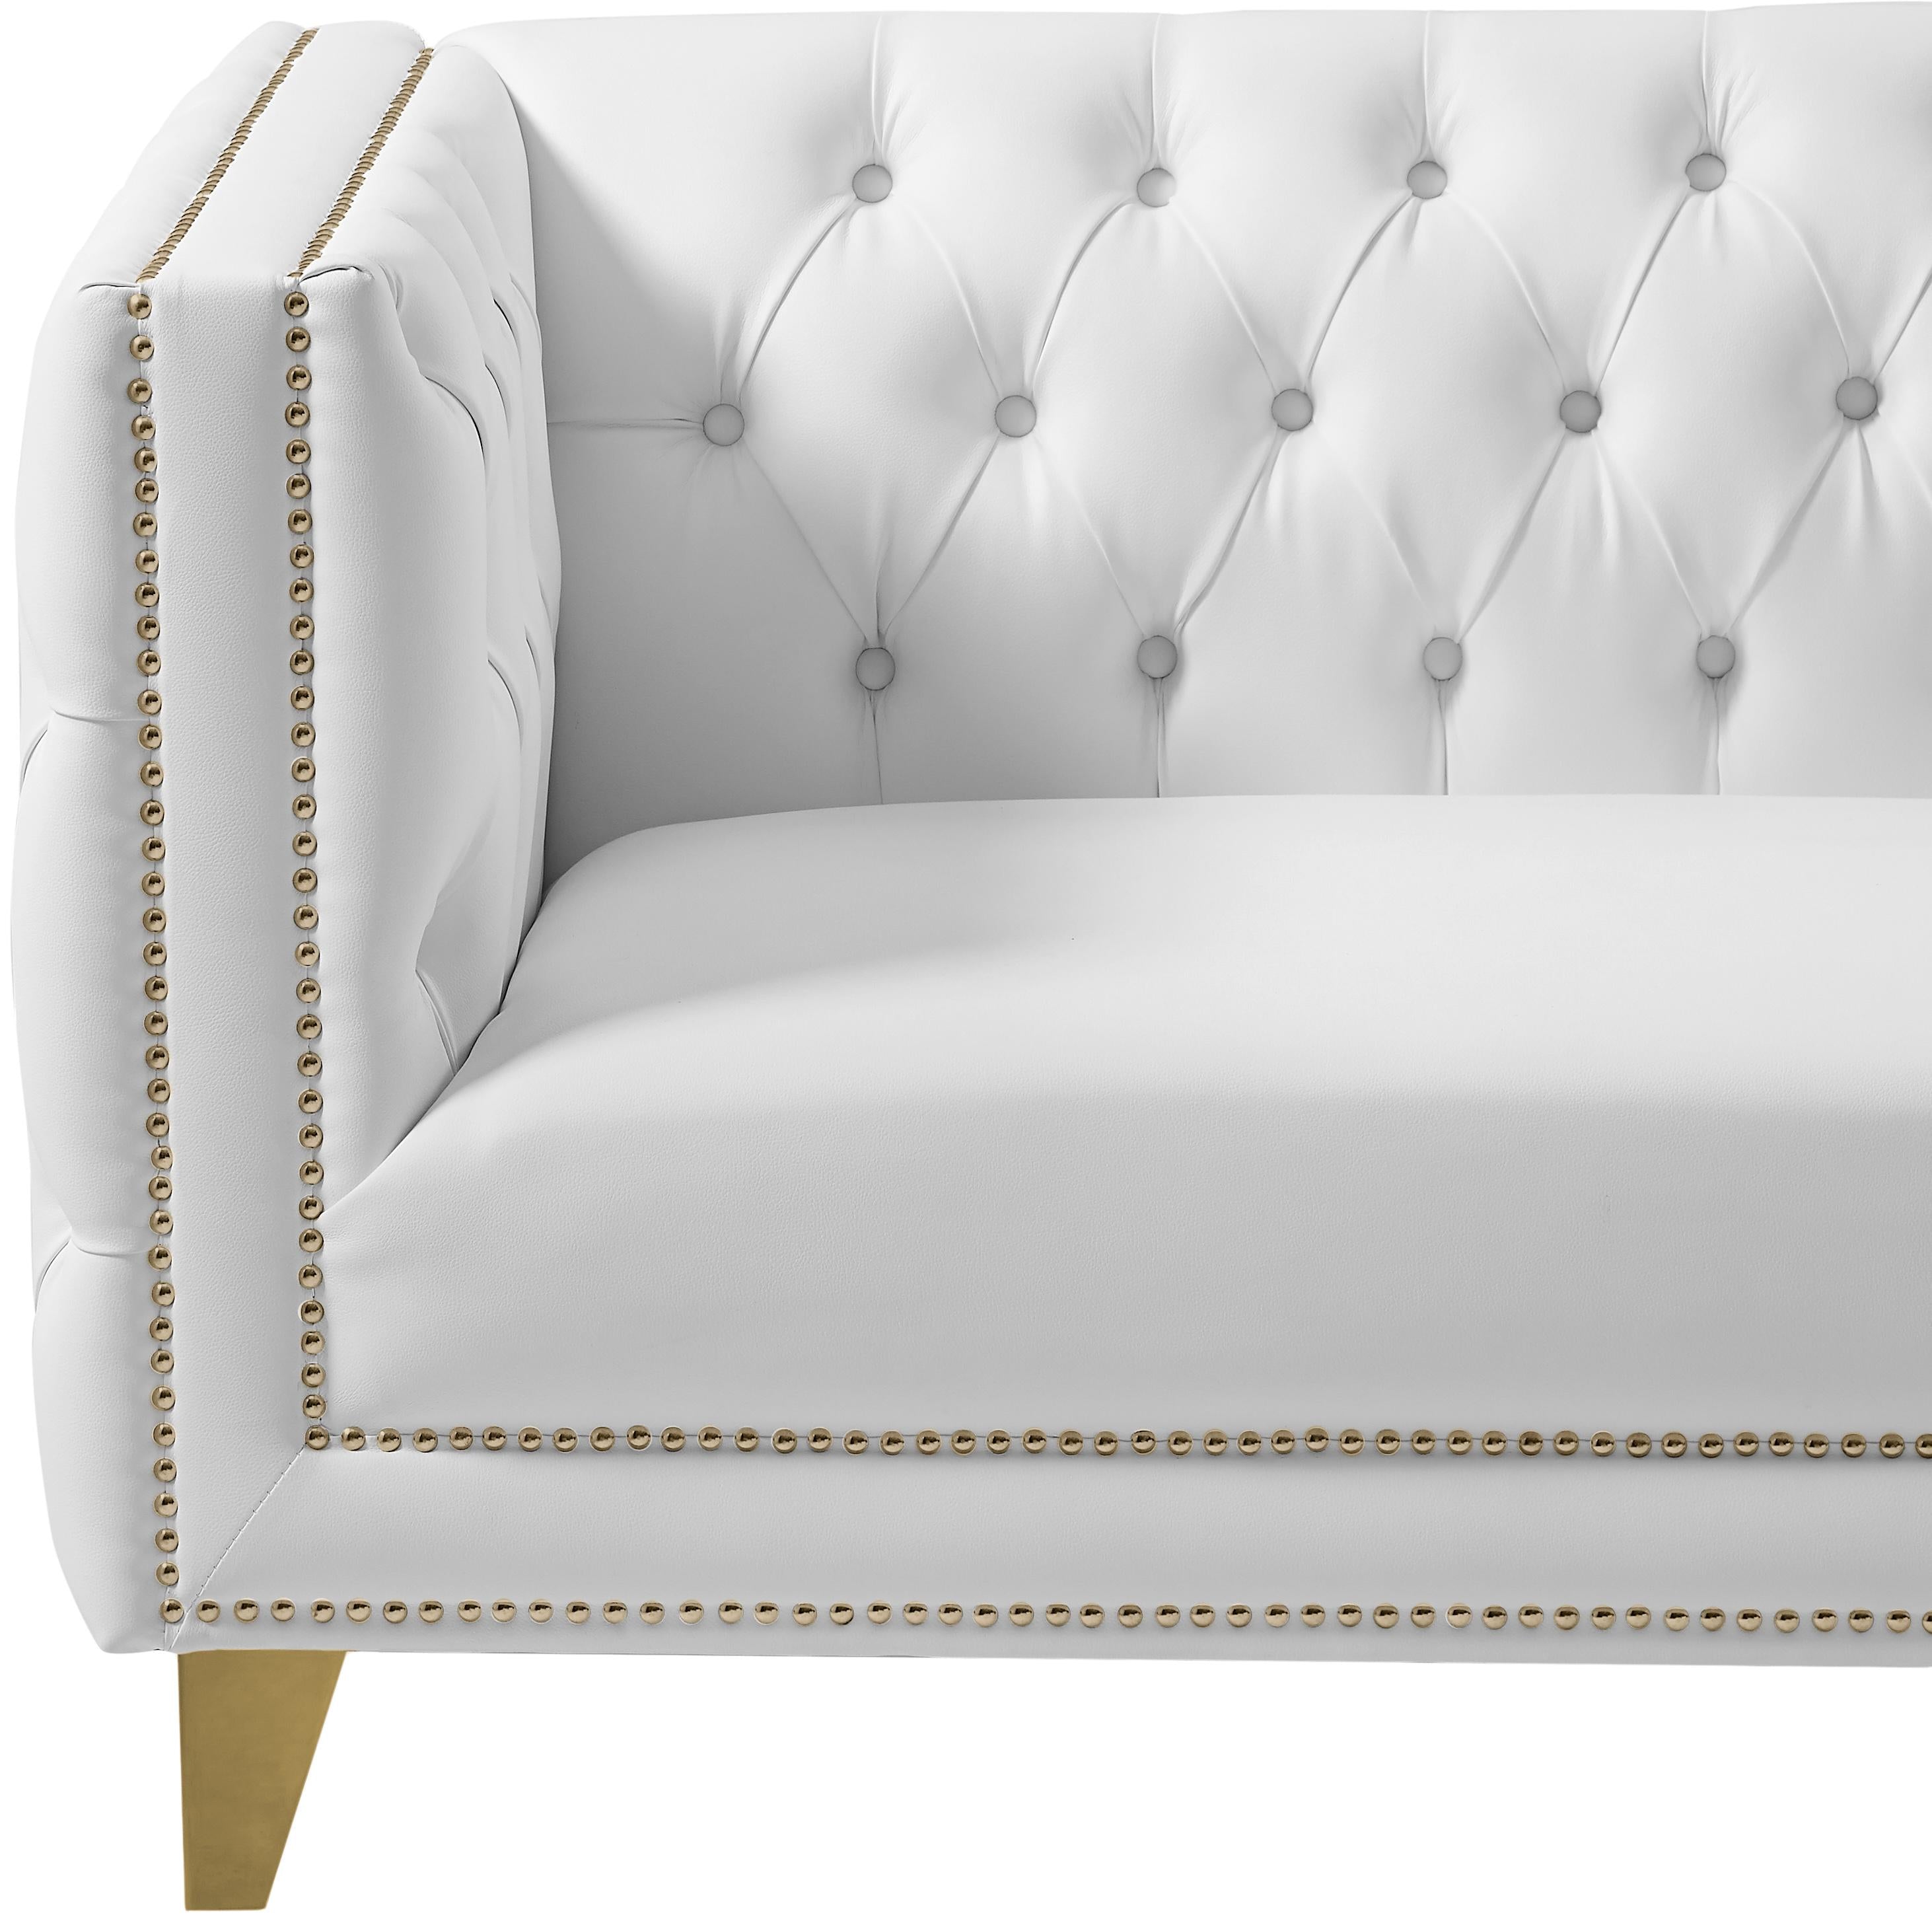 Michelle White Faux Leather Sofa - Luxury Home Furniture (MI)